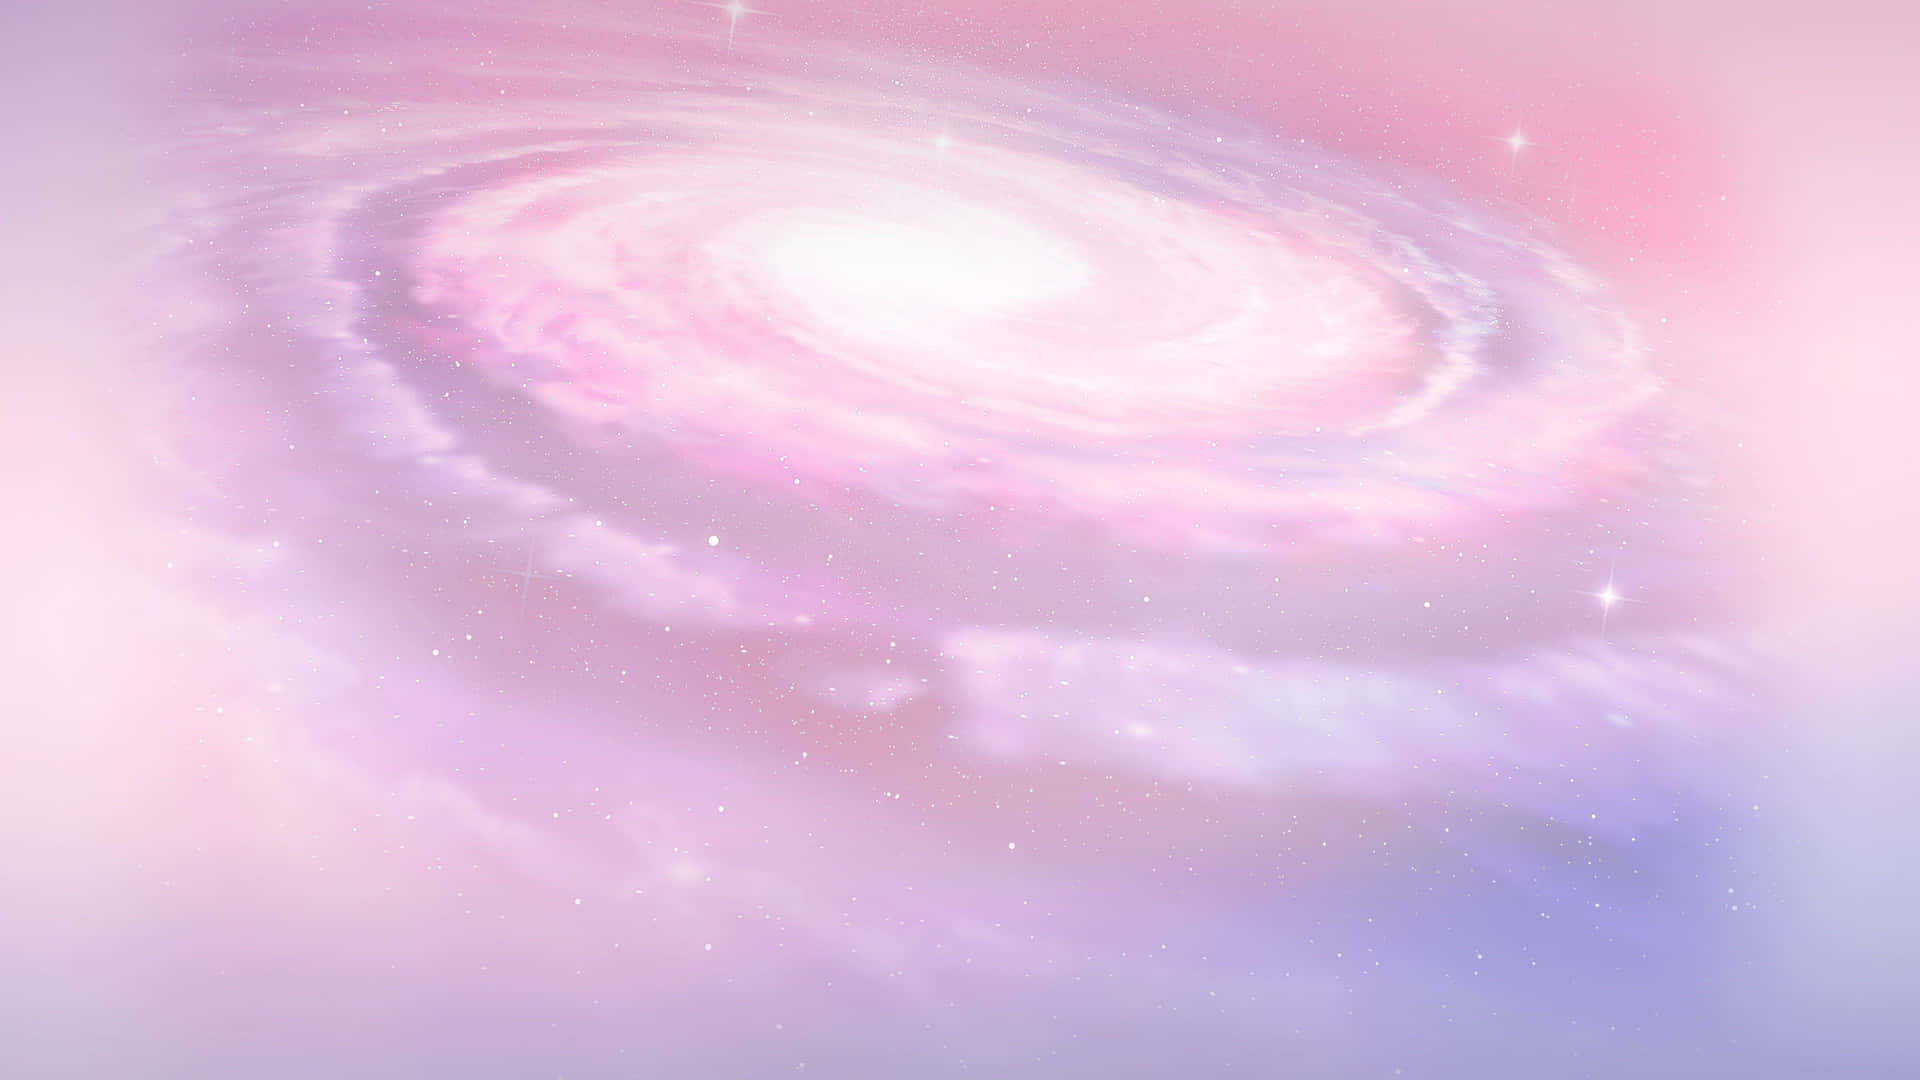 Mesmerizing Pink Galaxy Swirling Across the Sky